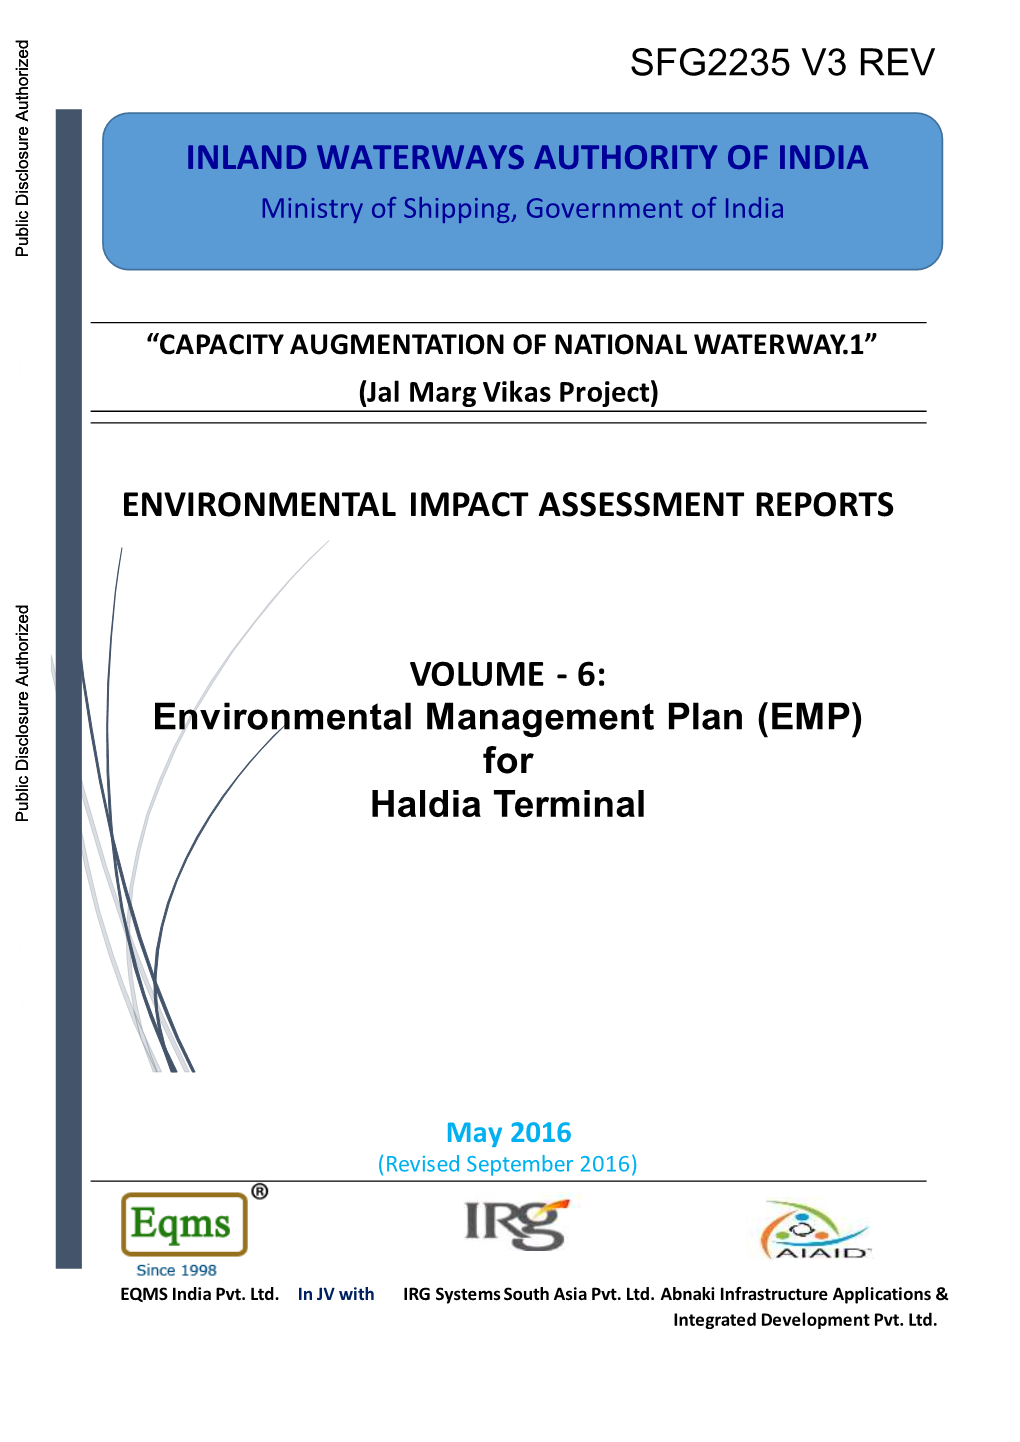 Environmental Management Plan (EMP) For